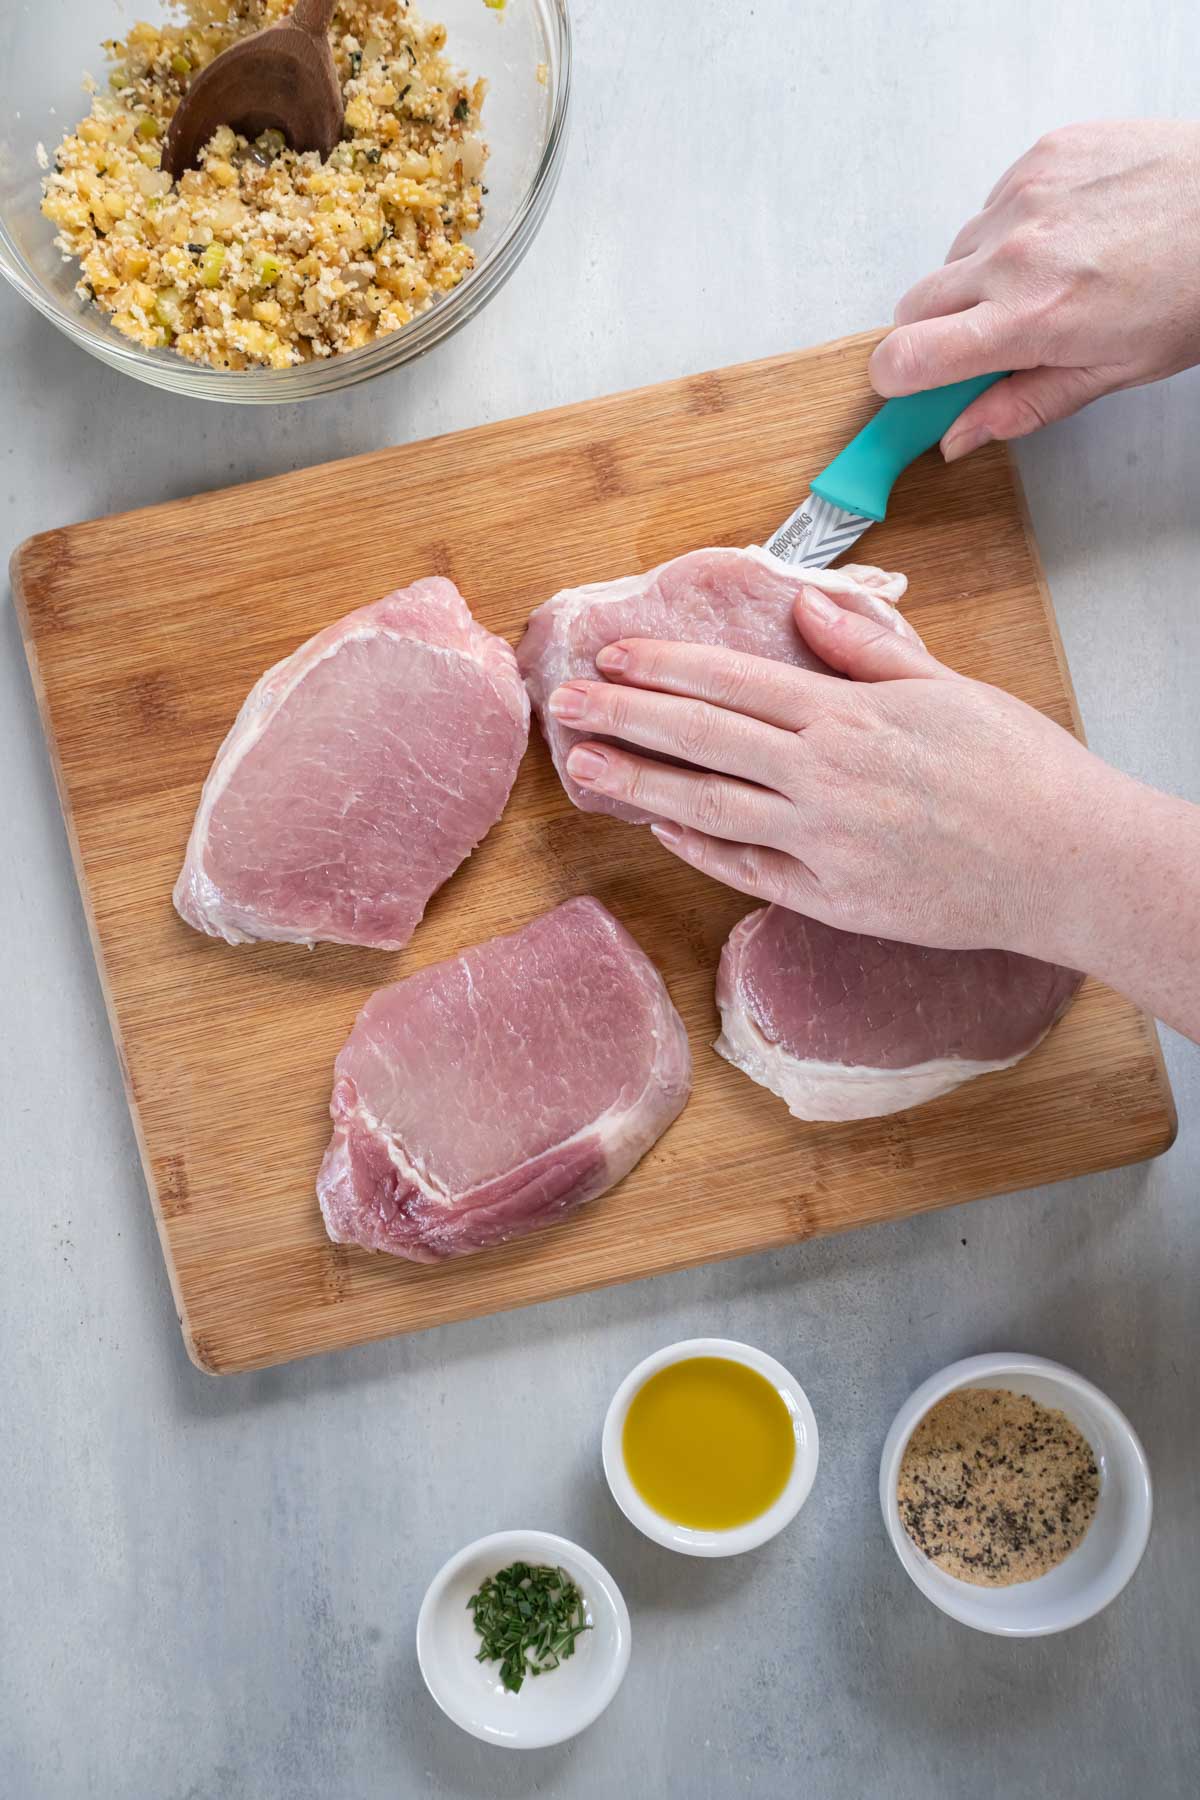 Using knife to cut a pocket in boneless pork chop.